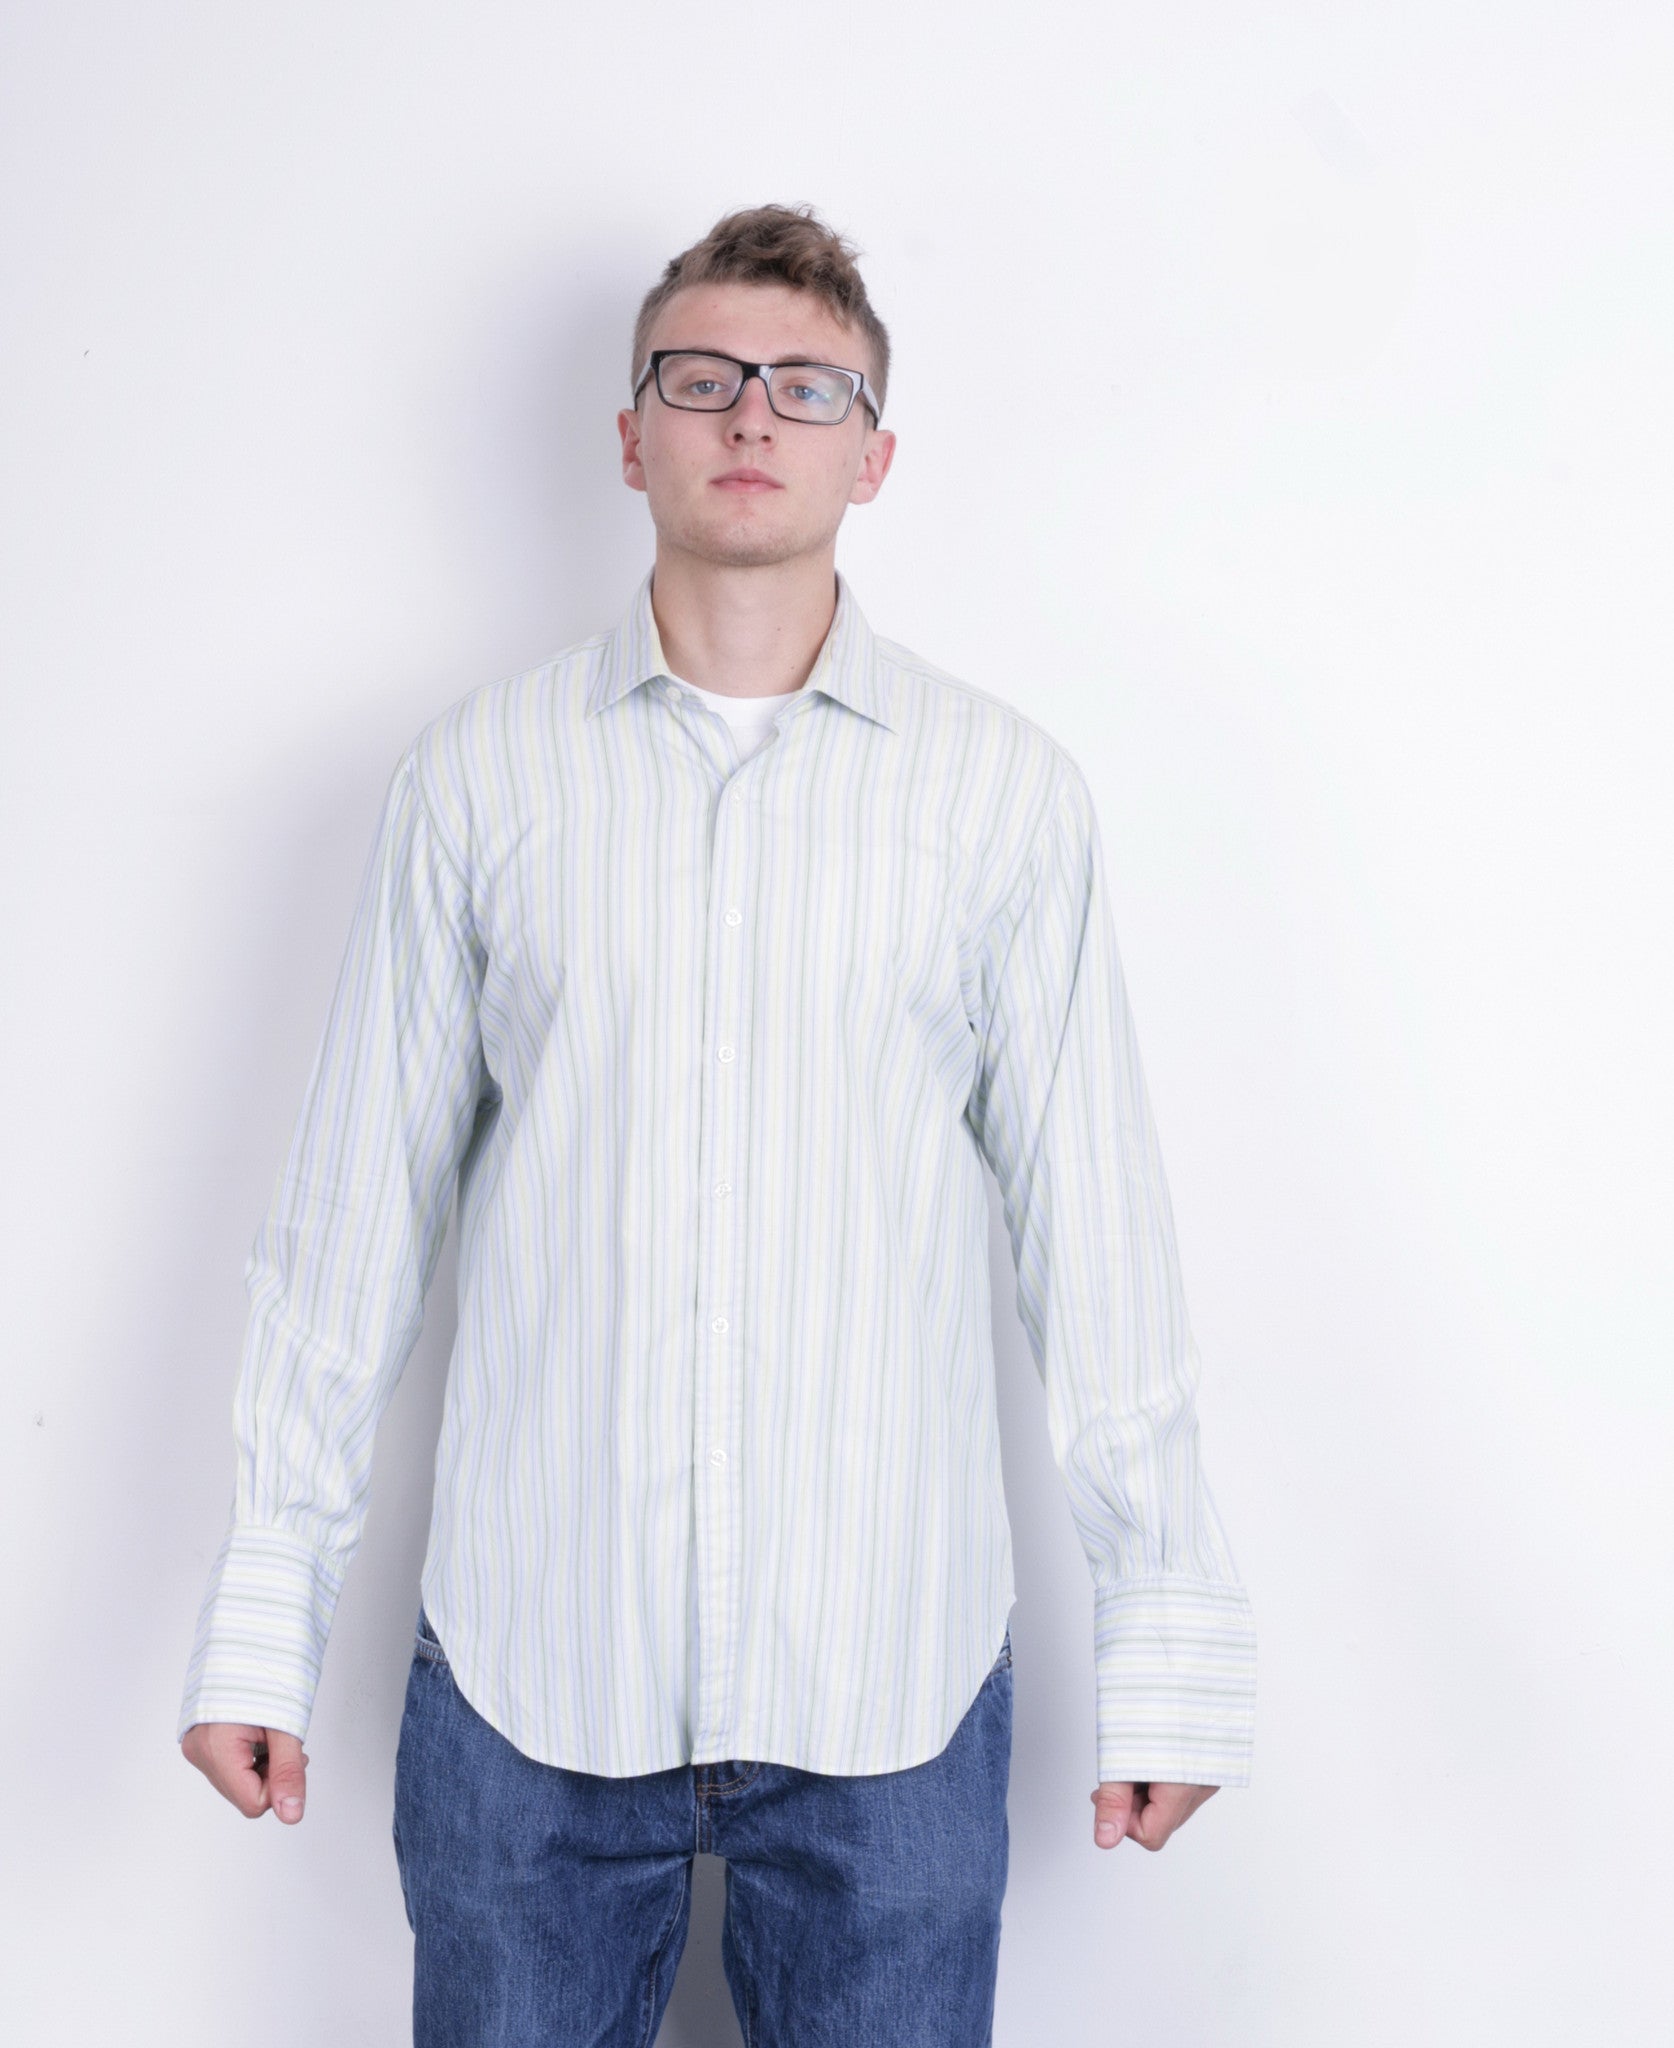 T.M. Lewin Mens 16.5 34.5 XL Formal Shirt Cotton Long Sleeve Striped White - RetrospectClothes